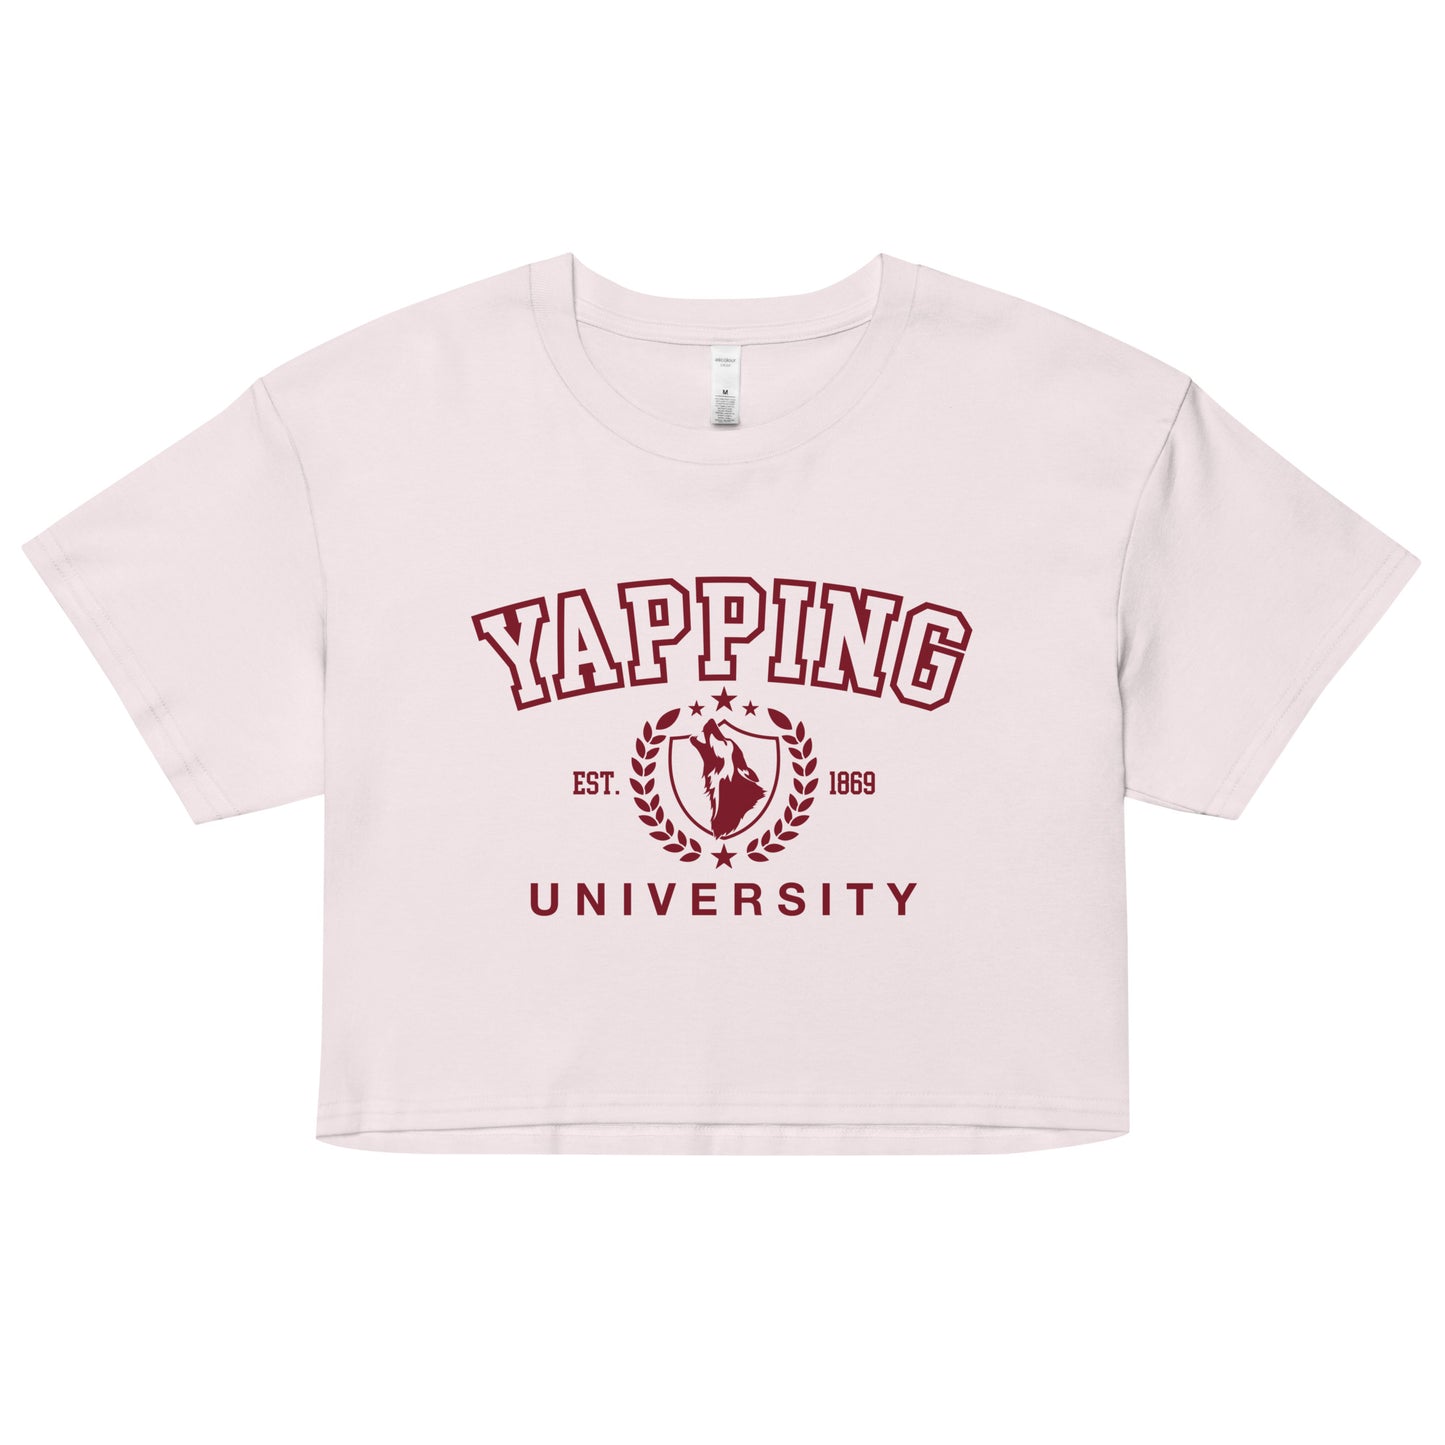 Yapping University crop top